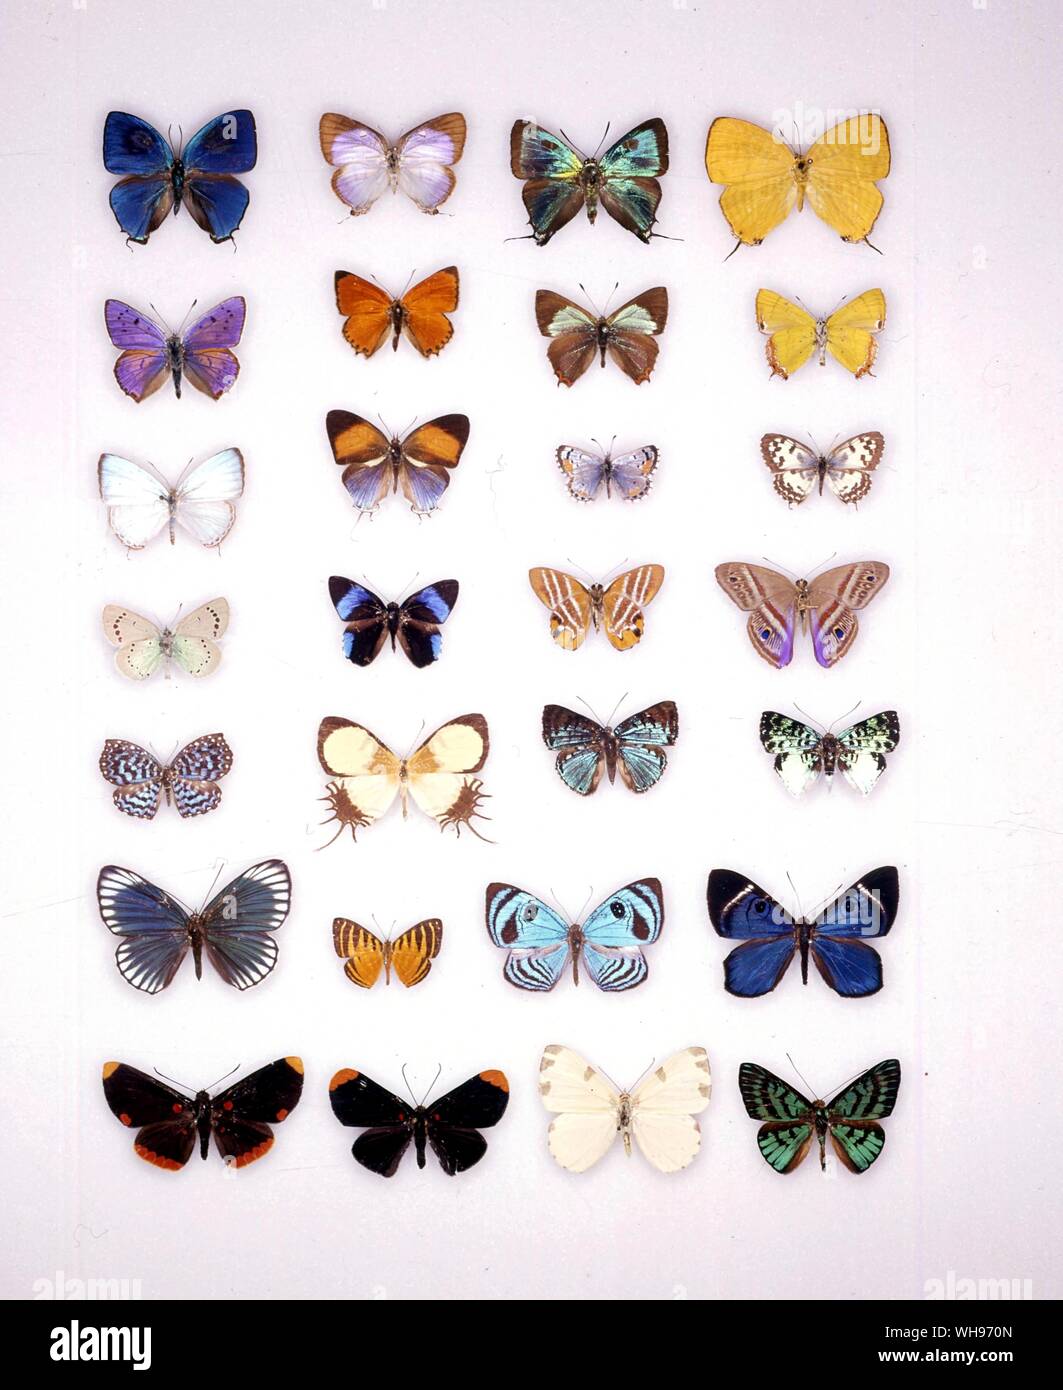 Butterflies/moths - (left to right) Mithras hemon, Rekoa meton, Atlides halesus, Japonica saepestriata, Lycaena alciphron, Lycaena thetis, Heliophorus androcles, Heliophorus tamu (underneath), Jamides alecto, Drupadia ravindra, Philotes sonorensis, Castalius rosimon, Glaucopsyche alexis (underneath), Euselasia euriteus, Euselasia euriteus (underneath), Euselasia issoria (underneath), Cremna actoris, Helicopis endymion, Menander menander, Menander hebrus, Uraneis ucubris, Hyphilaria parthenis, Semomesia capanea, Mesosemia mevania, Lymnas pixe, Lymnas xarifa, Hermathena candidata, Alesa prema Stock Photo